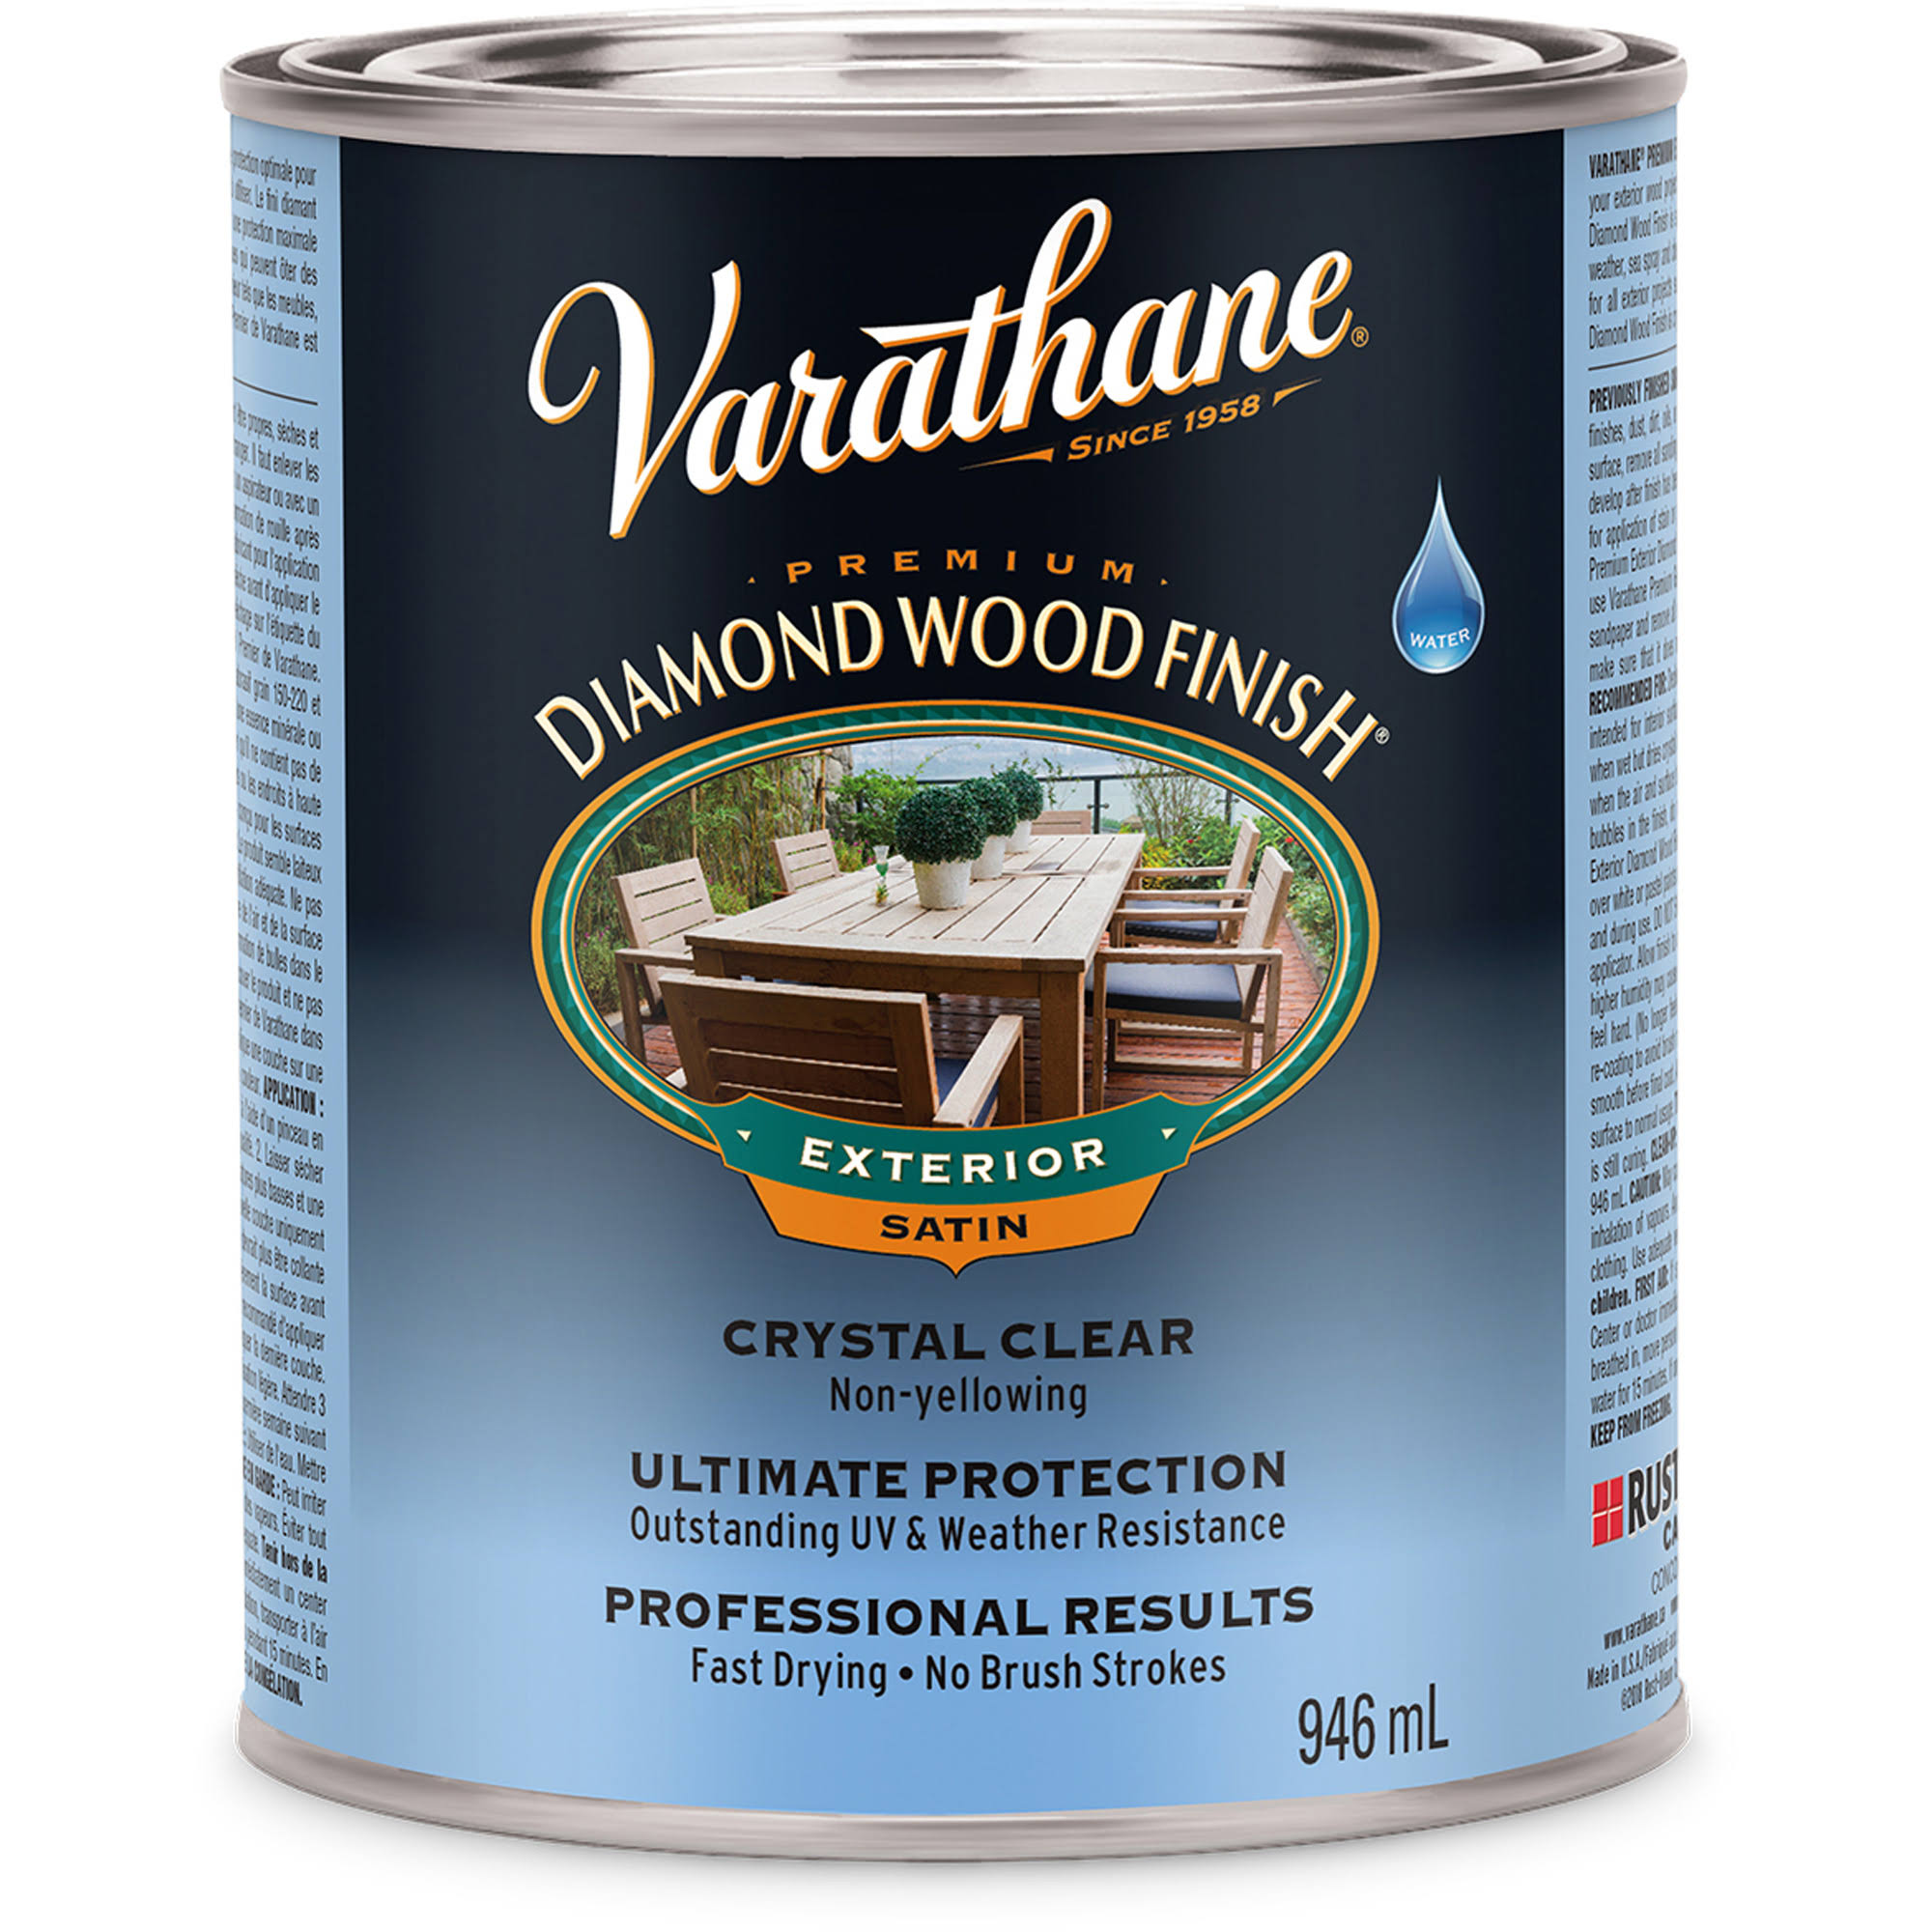 Rust-Oleum Varathane Classic Clear Water Based Outdoor Spar Urethane - Satin Finish